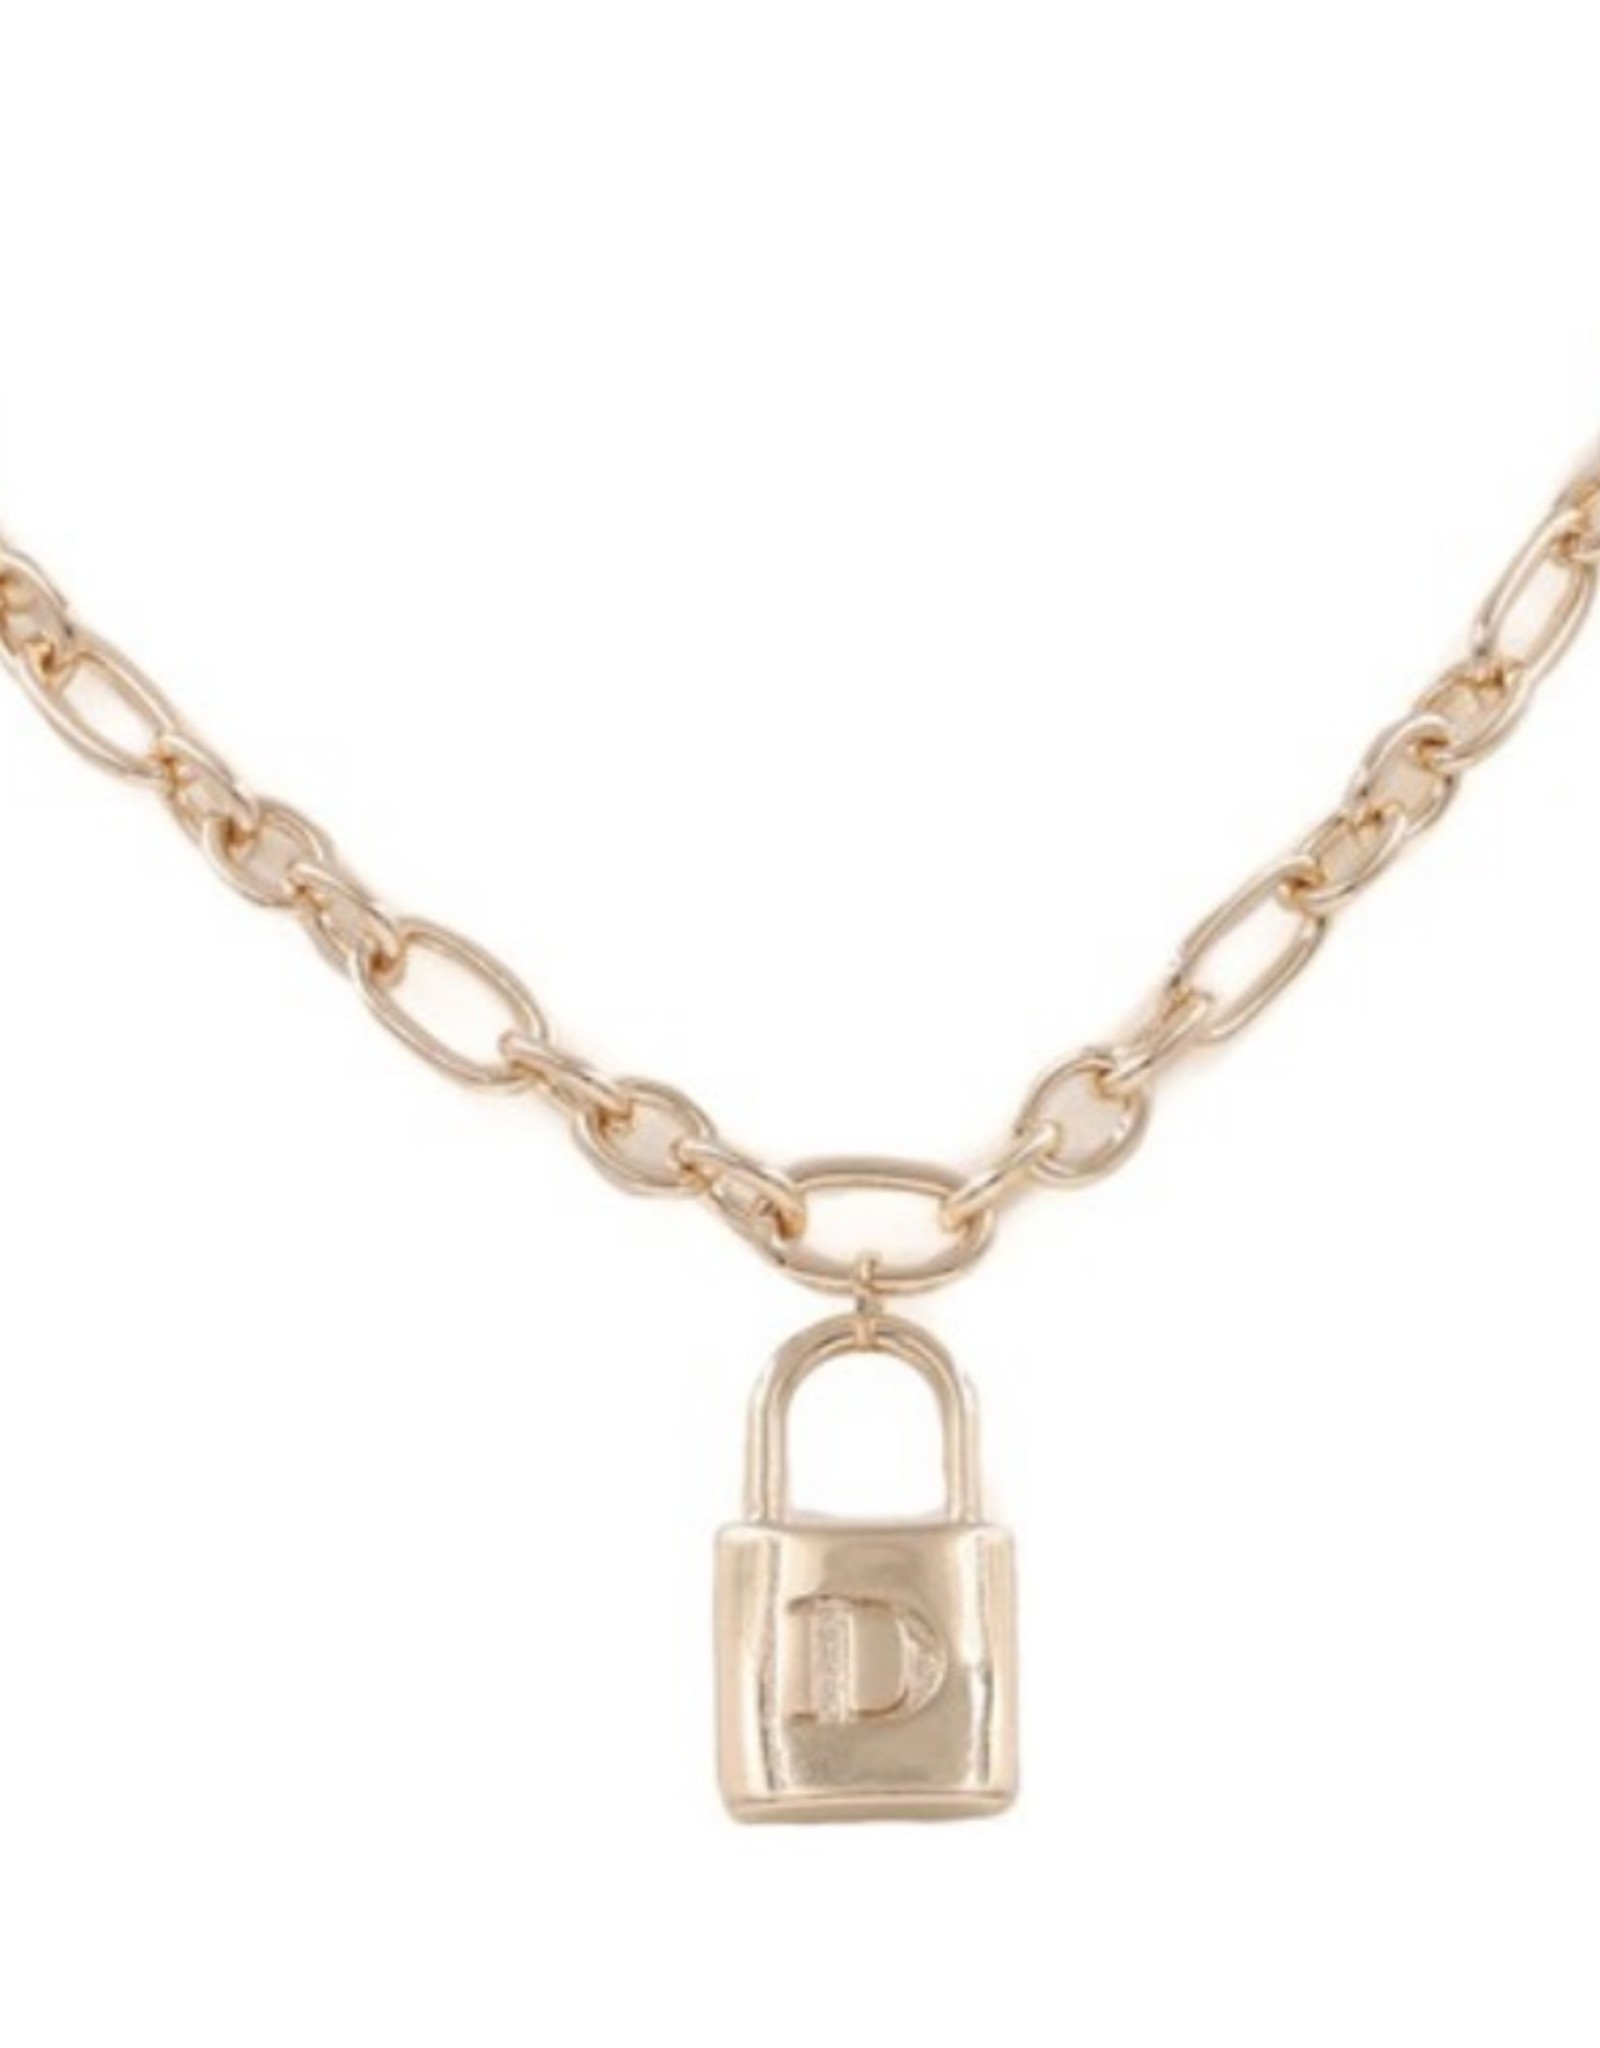 Metal lock pendant necklace